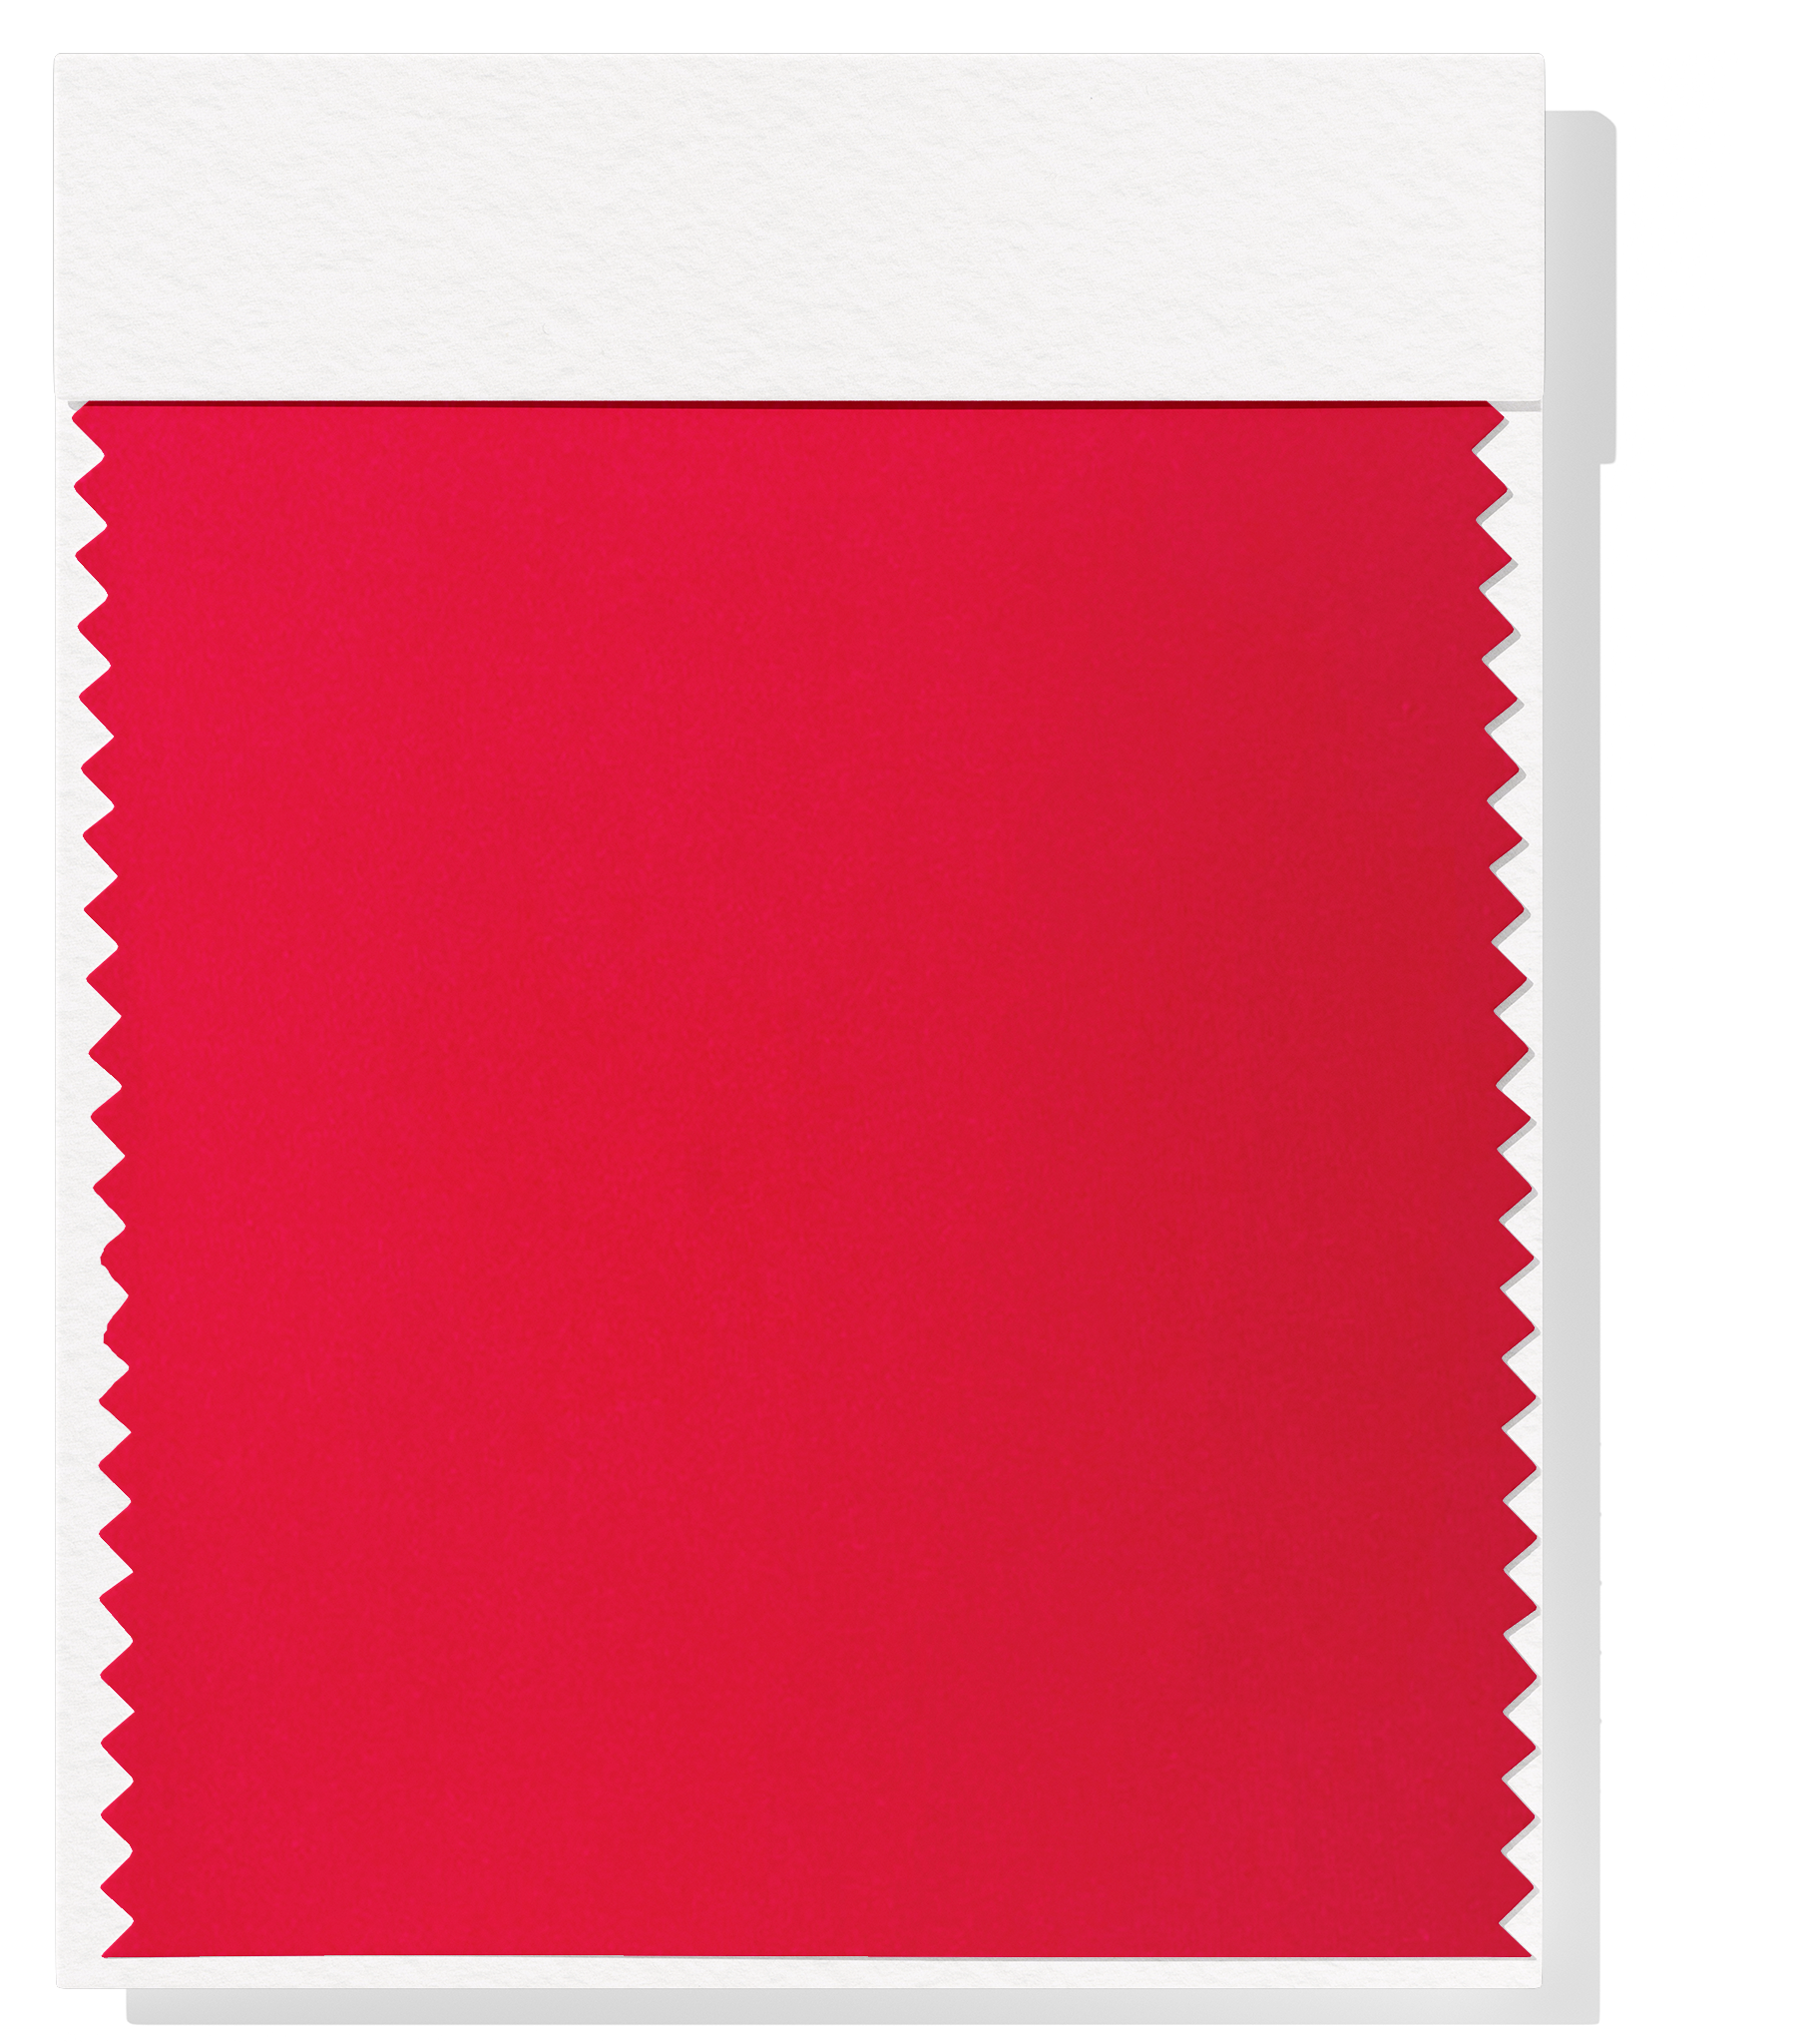 Ultra Knit $9.00p/m - Light Red